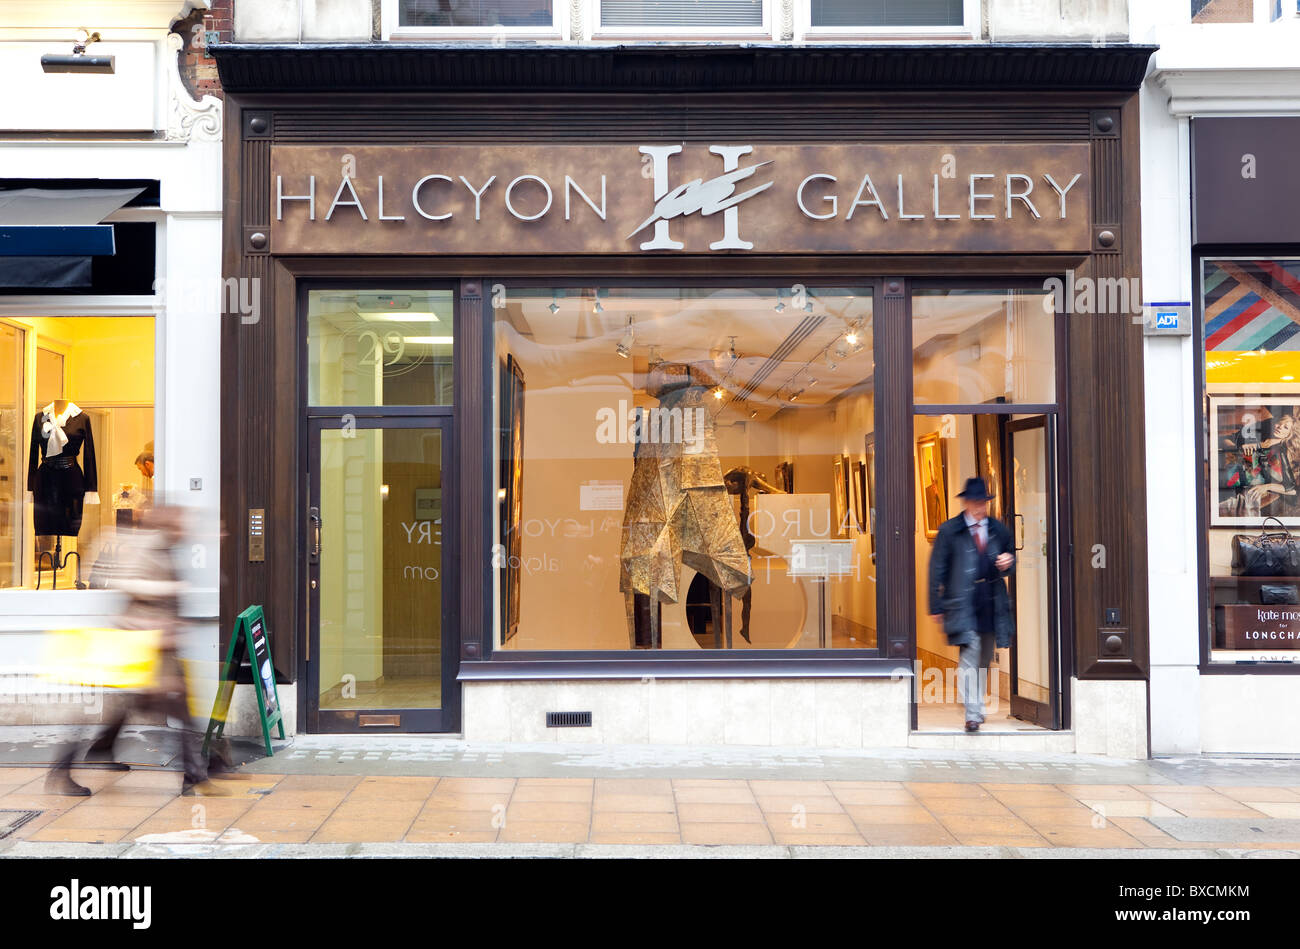 El Halcyon Gallery de New Bond Street, Londres. Foto de stock